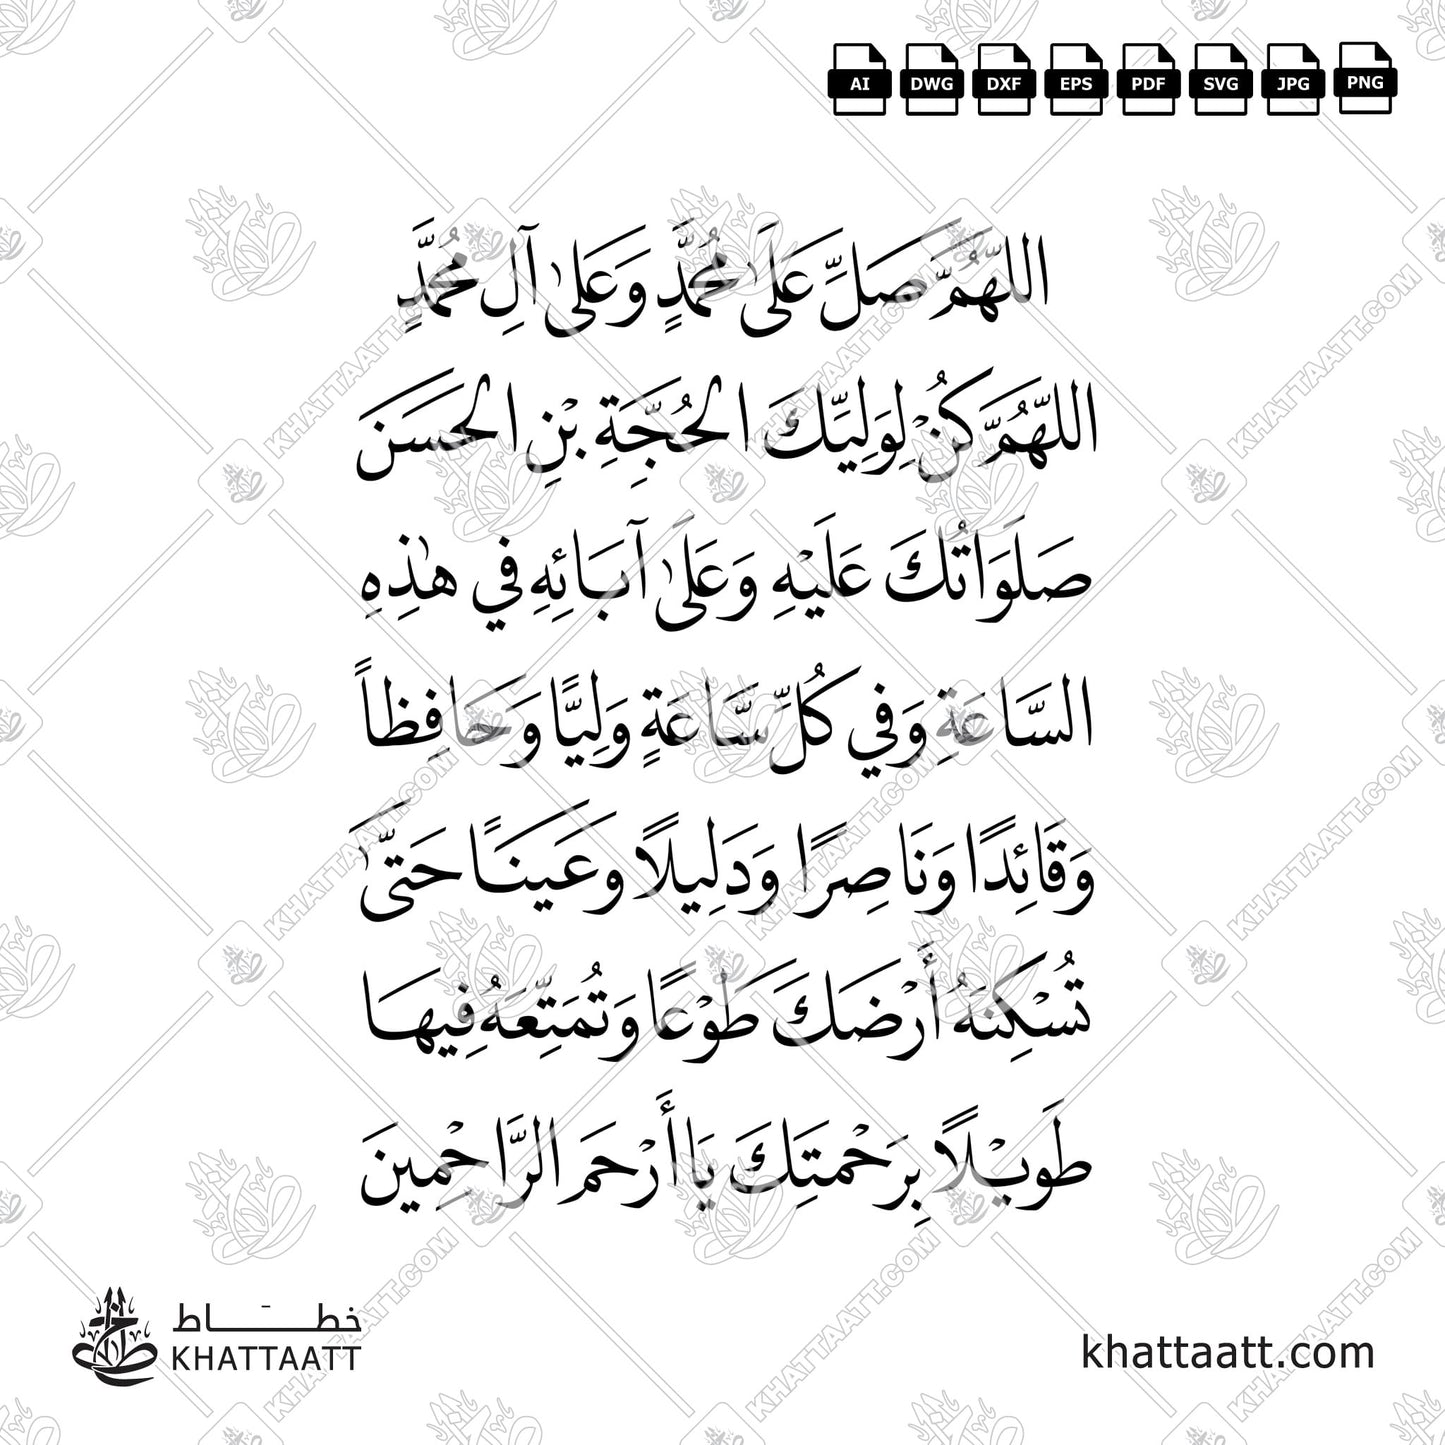 Download Arabic calligraphy تحميل مخطوطة خط عربي of Dua Al-Faraj - دعاء الفرج (N012) Naskh - خط النسخ in vector فيكتور and png